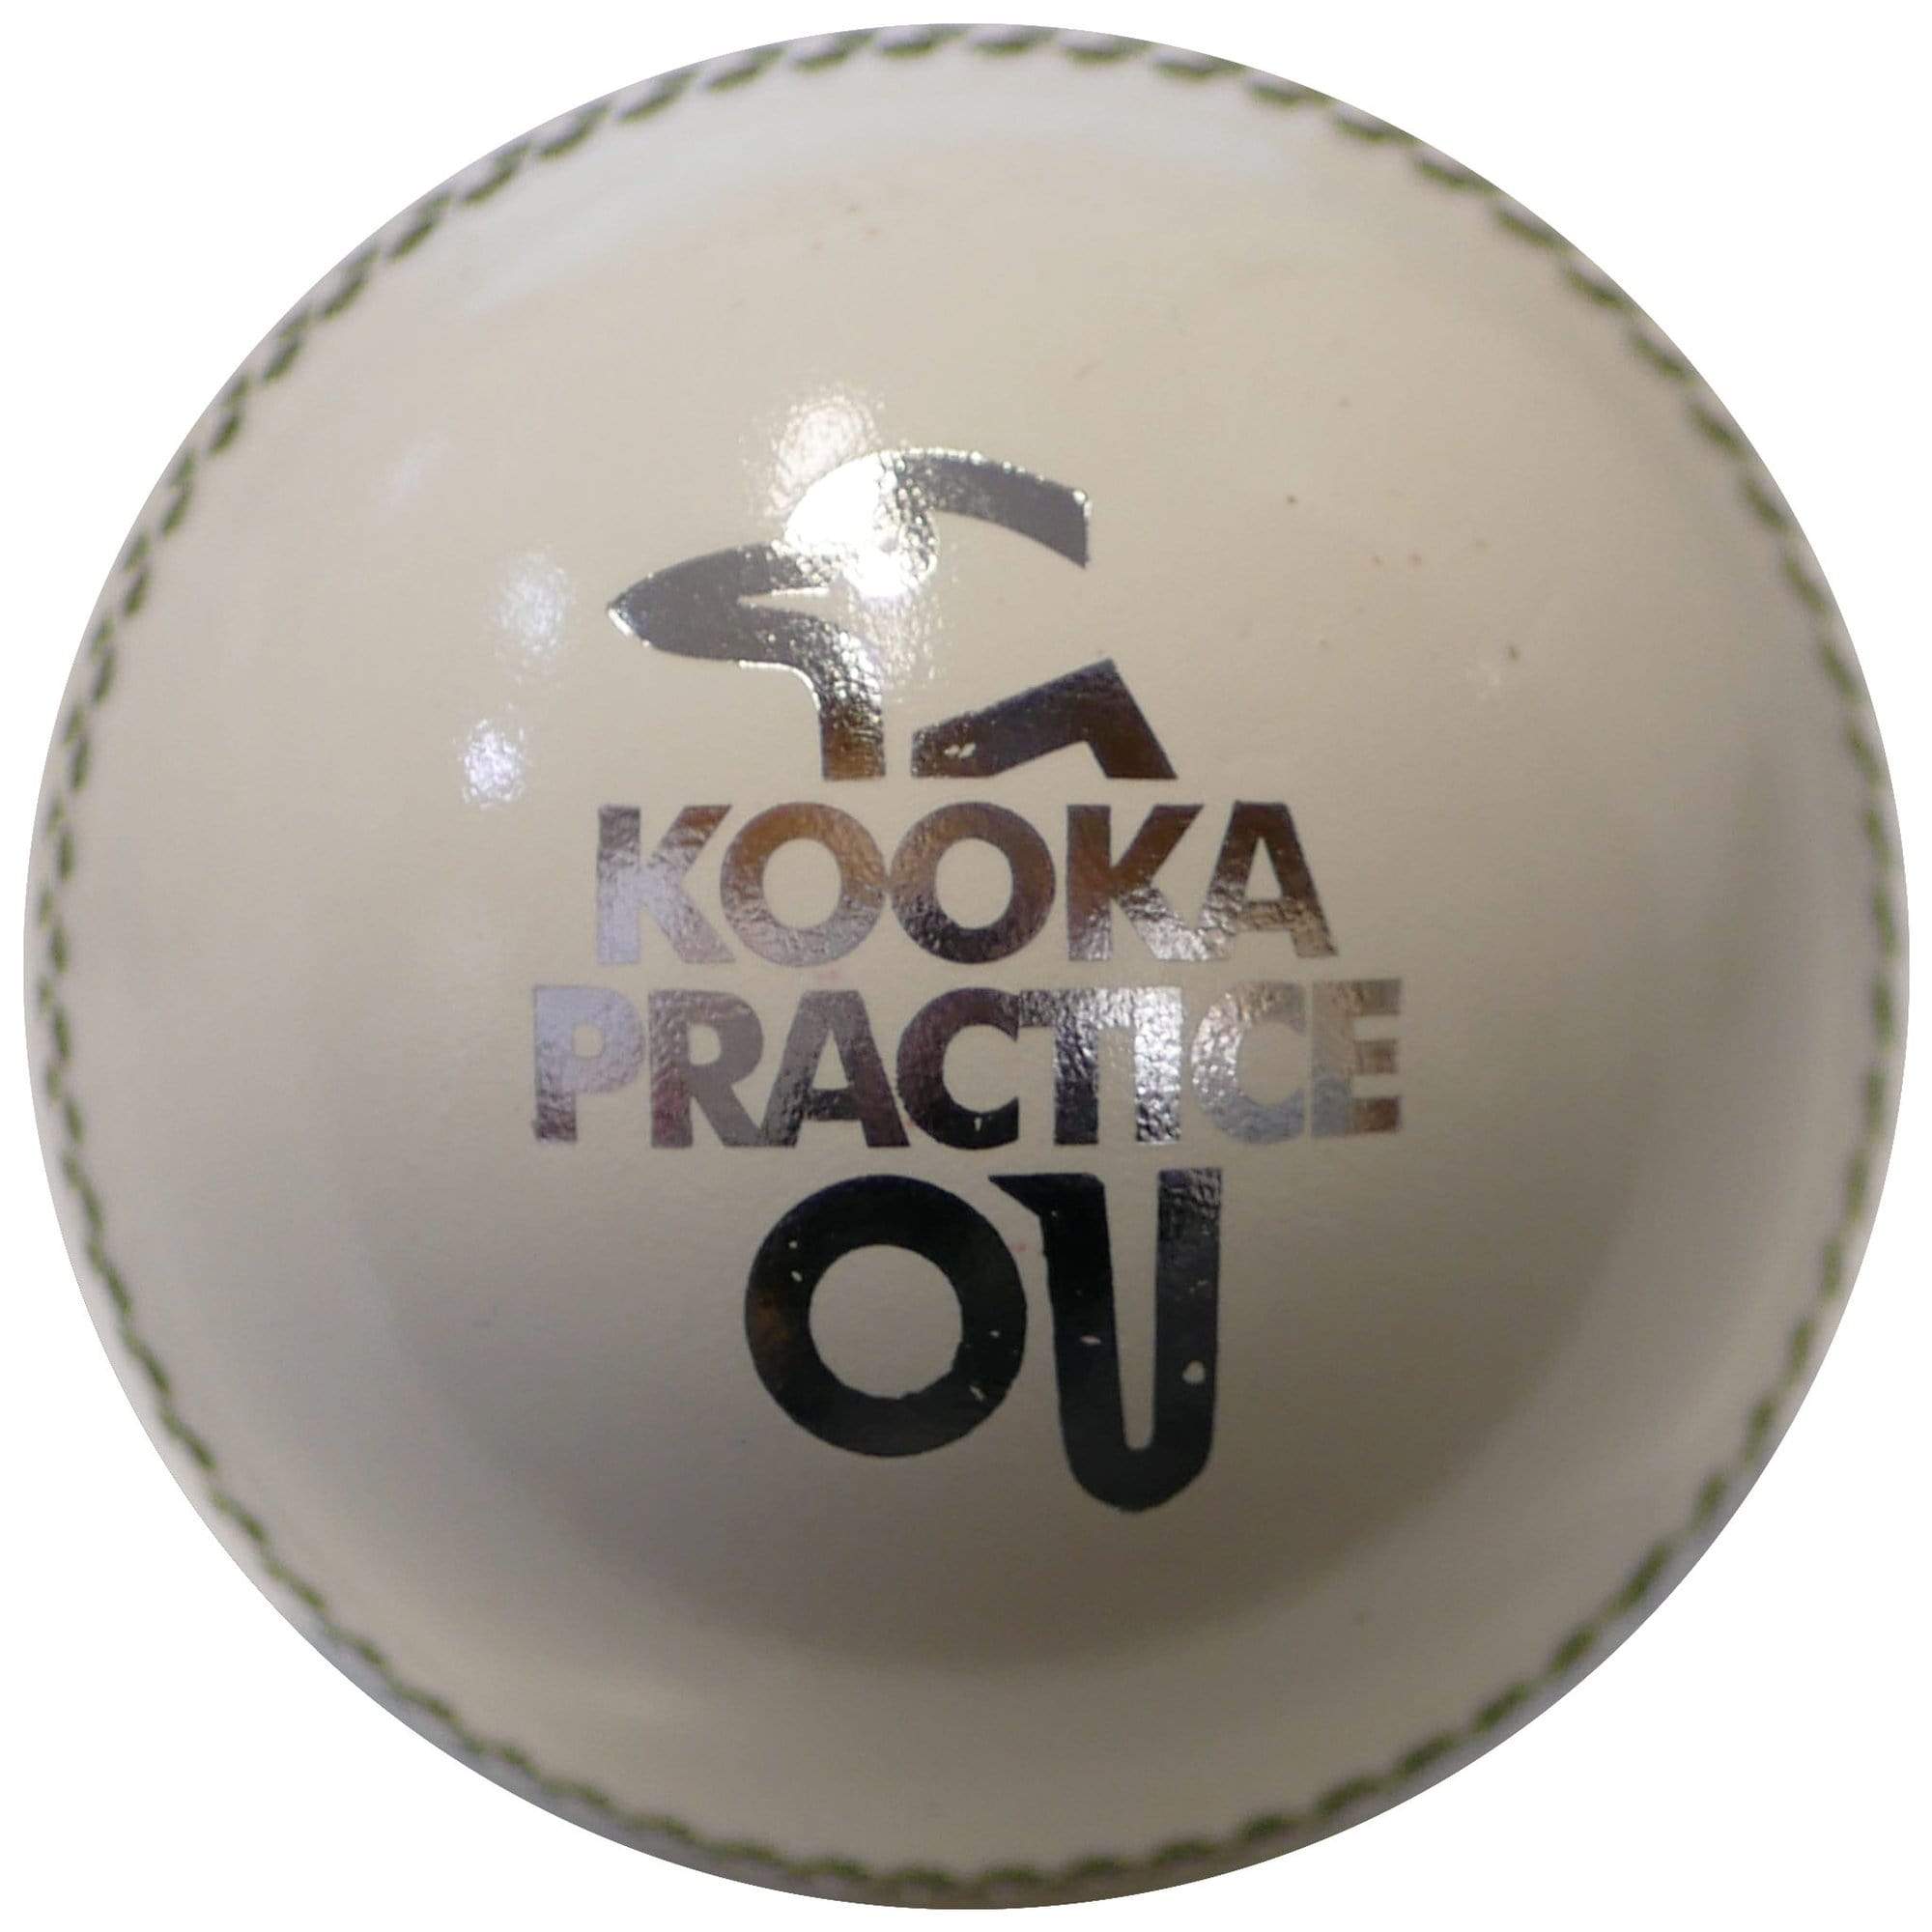 Kookaburra Cricket Balls White Kookaburra 142g Practice Cricket Ball